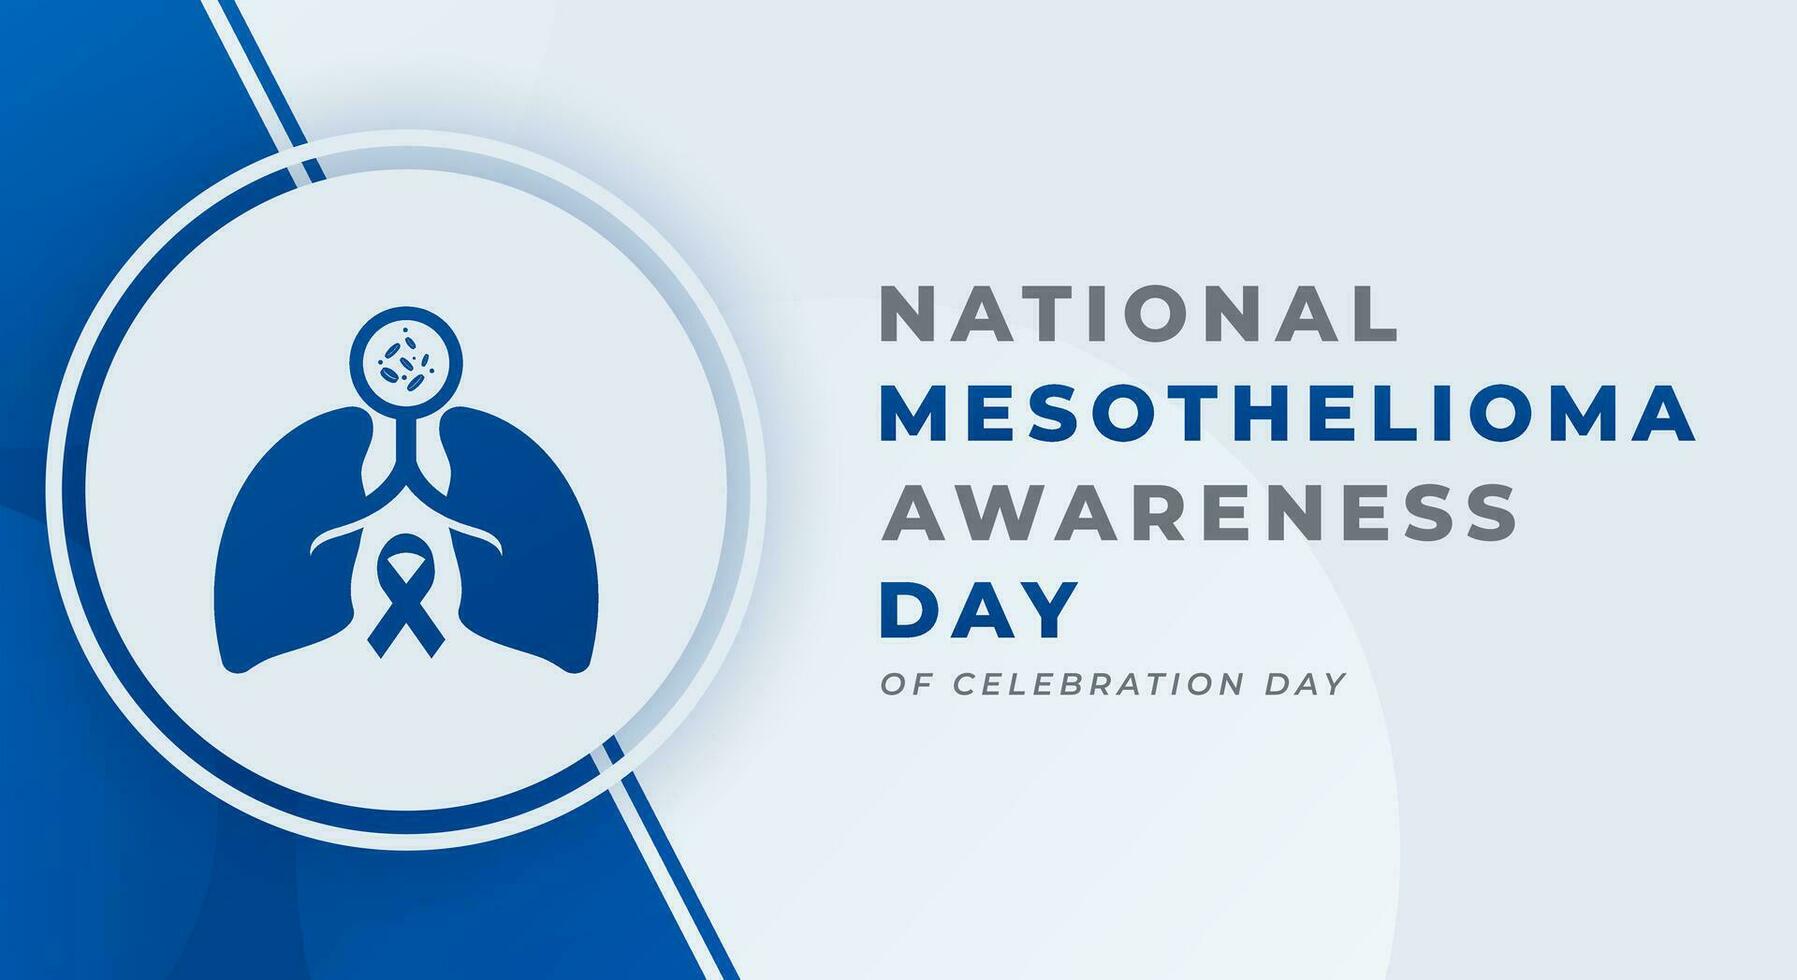 National Mesothelioma Awareness Day Celebration Vector Design Illustration for Background, Poster, Banner, Advertising, Greeting Card